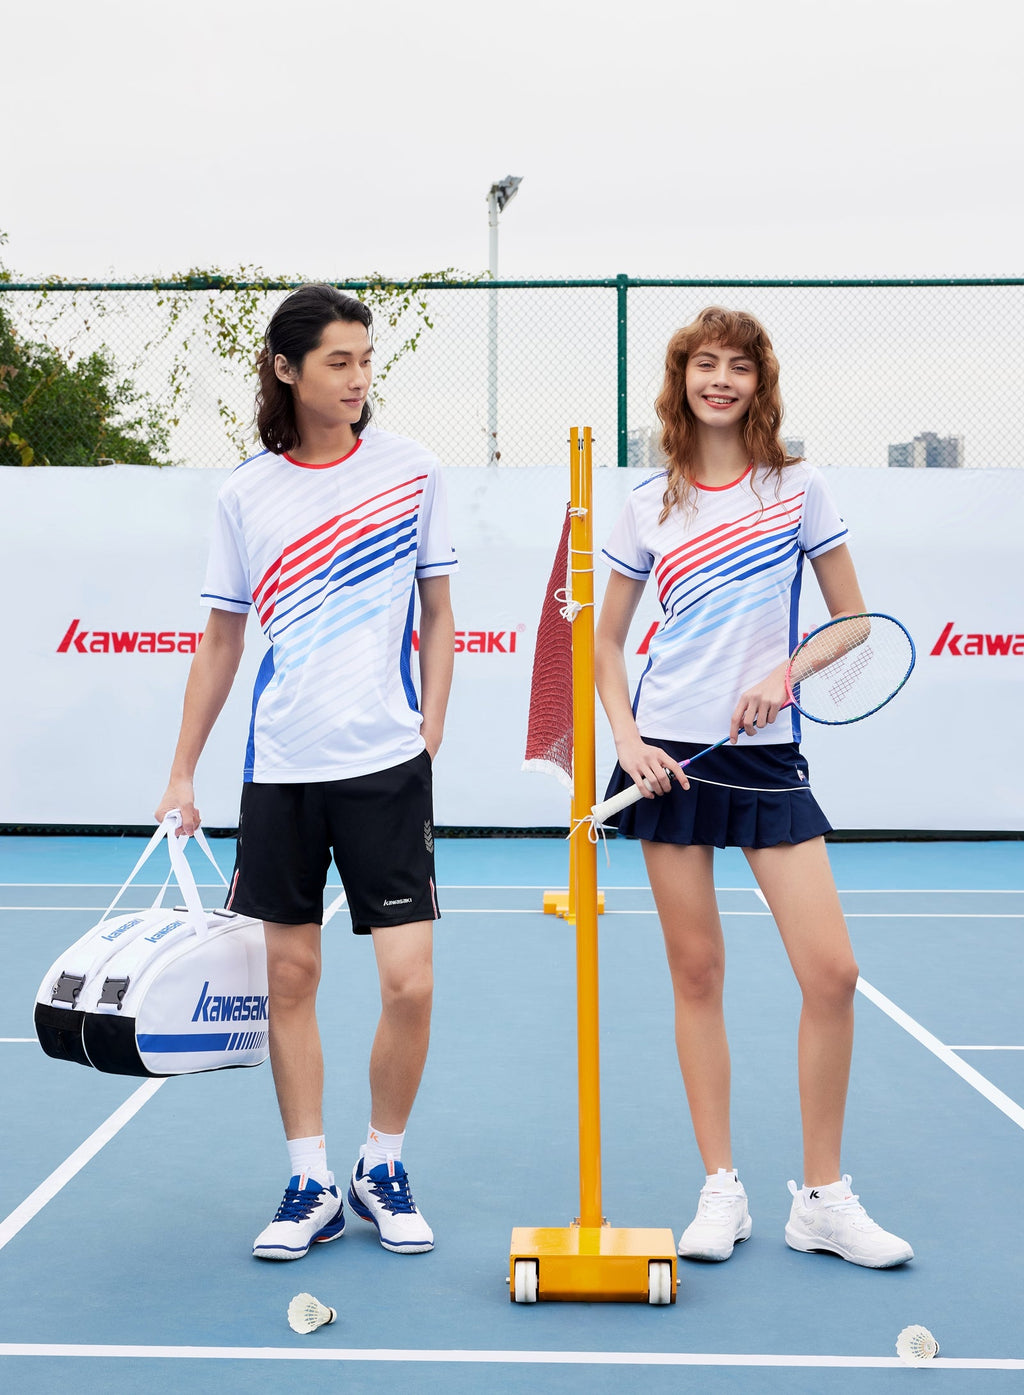 Kawasaki Female badminton T Shirt K1C02-A2929-1 White/Green - badminton racket review